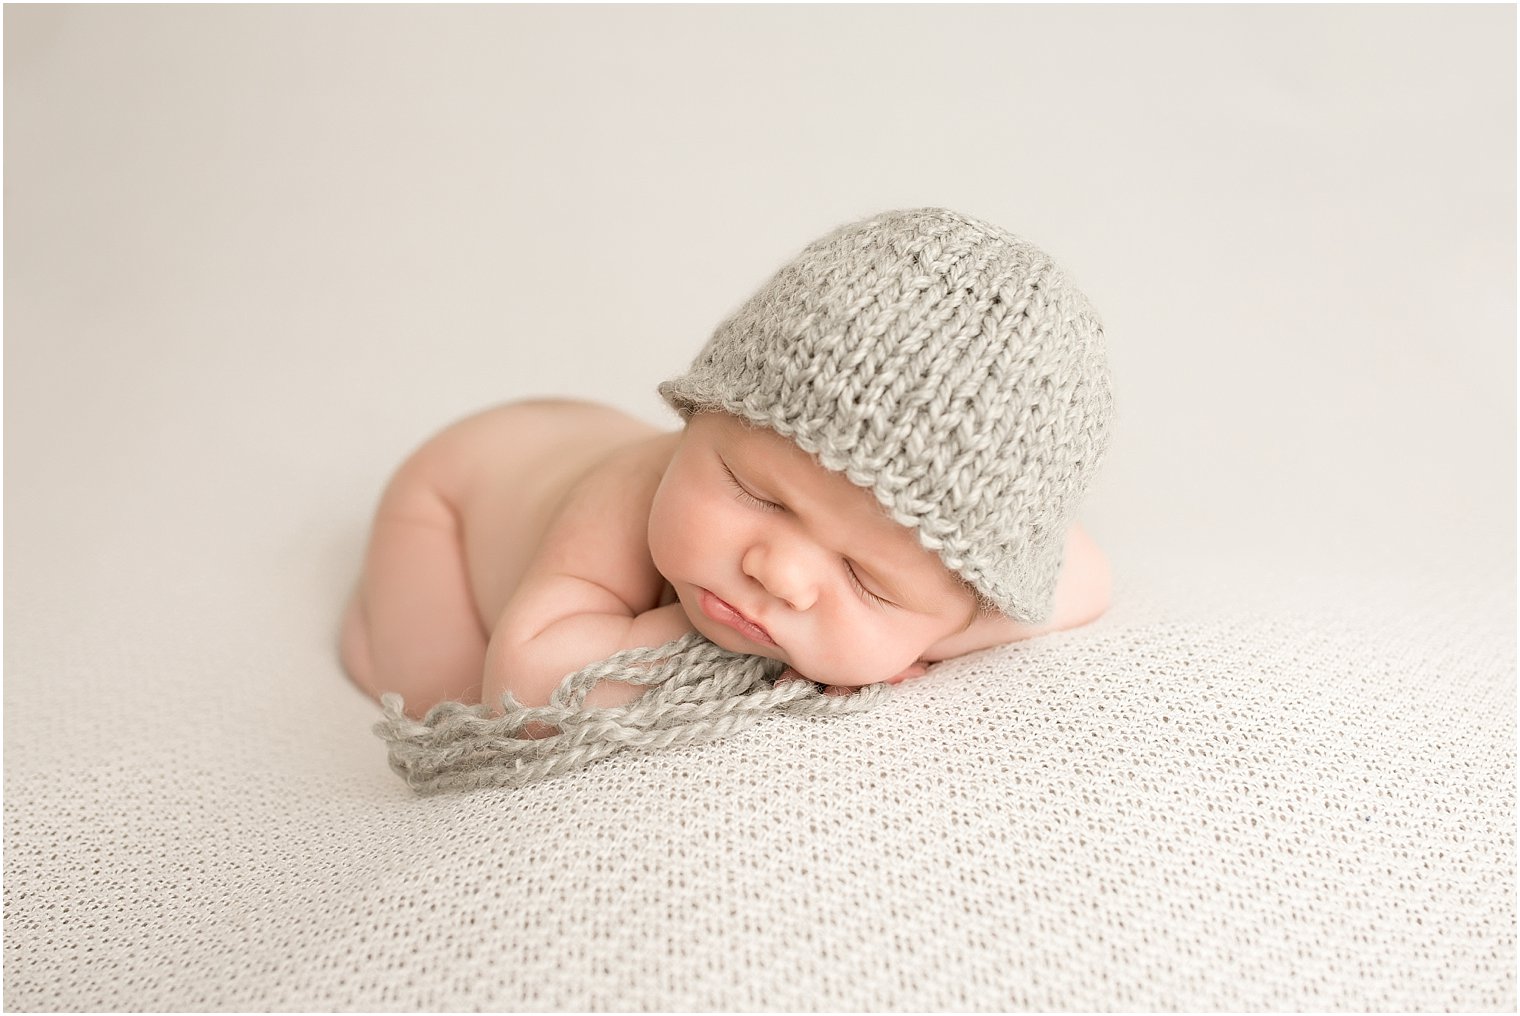 Newborn boy with gray hat